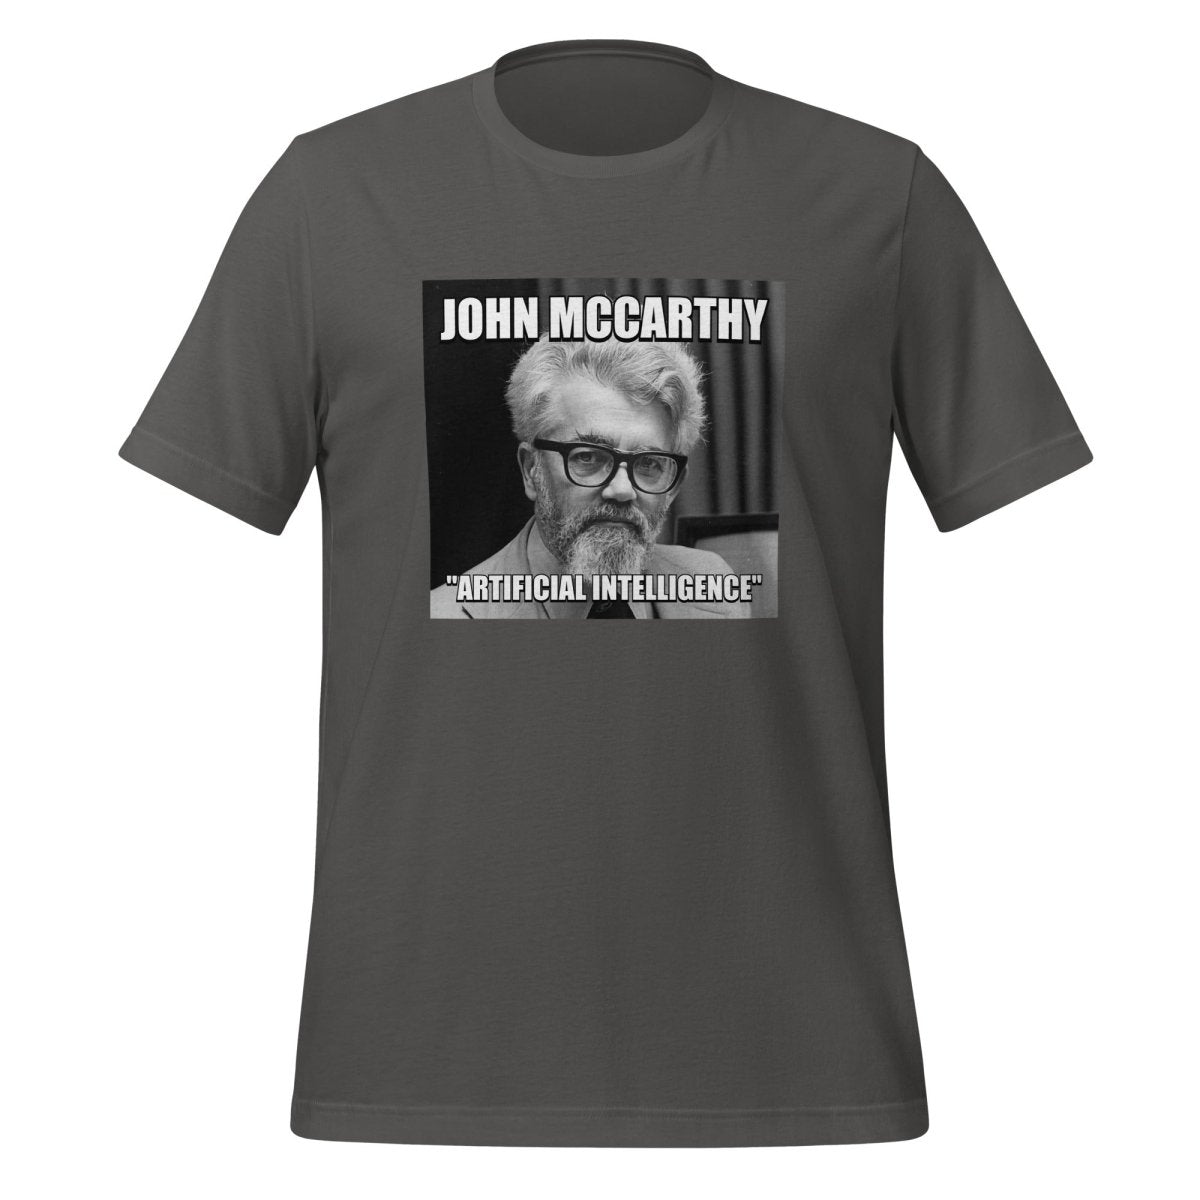 John McCarthy "Artificial Intelligence" T - Shirt (unisex) - Asphalt - AI Store